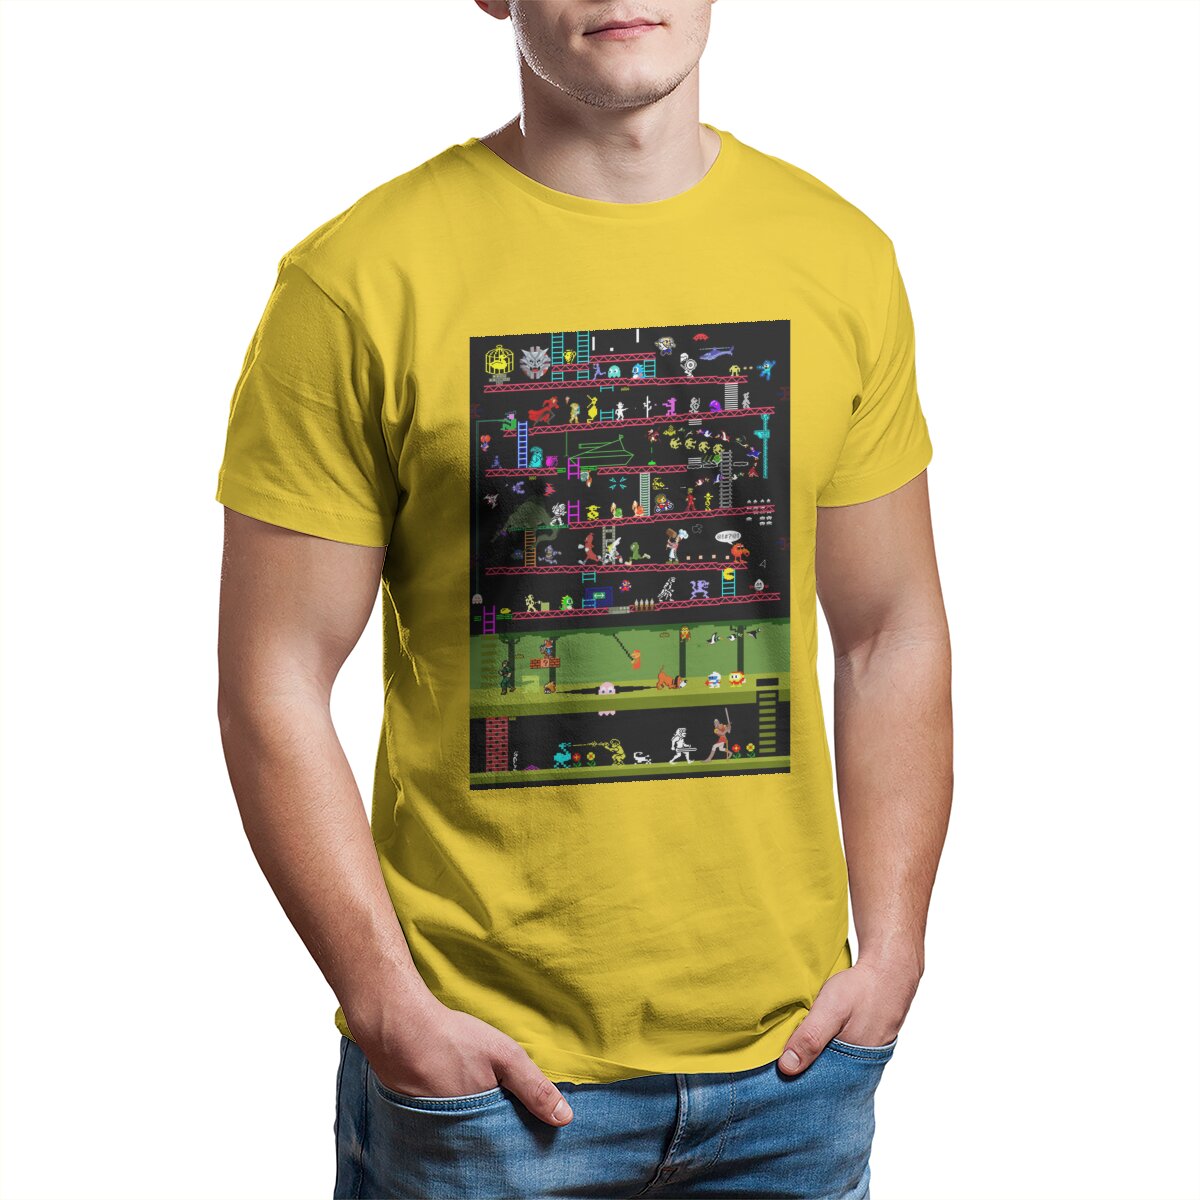 50 Retro Video Games T-Shirt